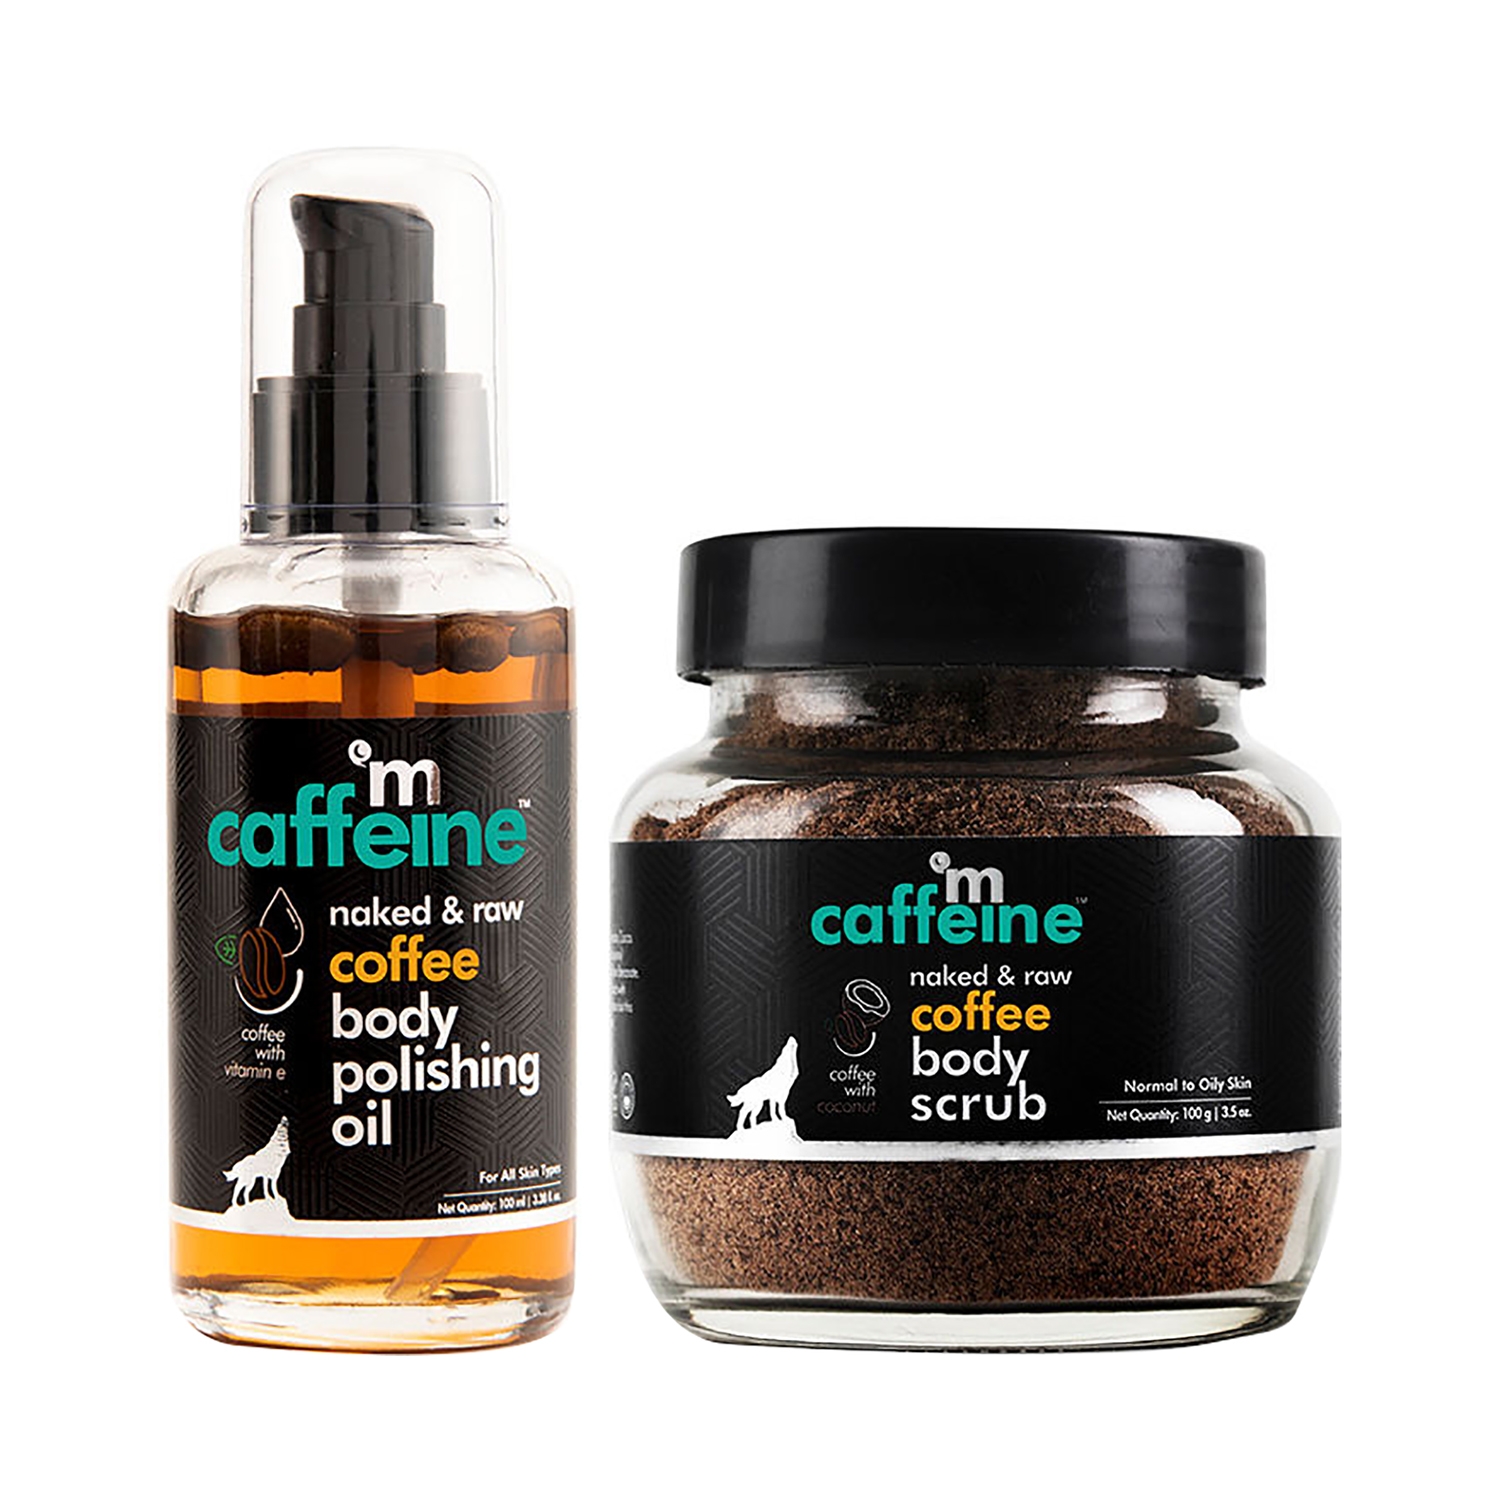 mCaffeine | mCaffeine Coffee Body Scrub And Body Polishing Oil (2Pcs)